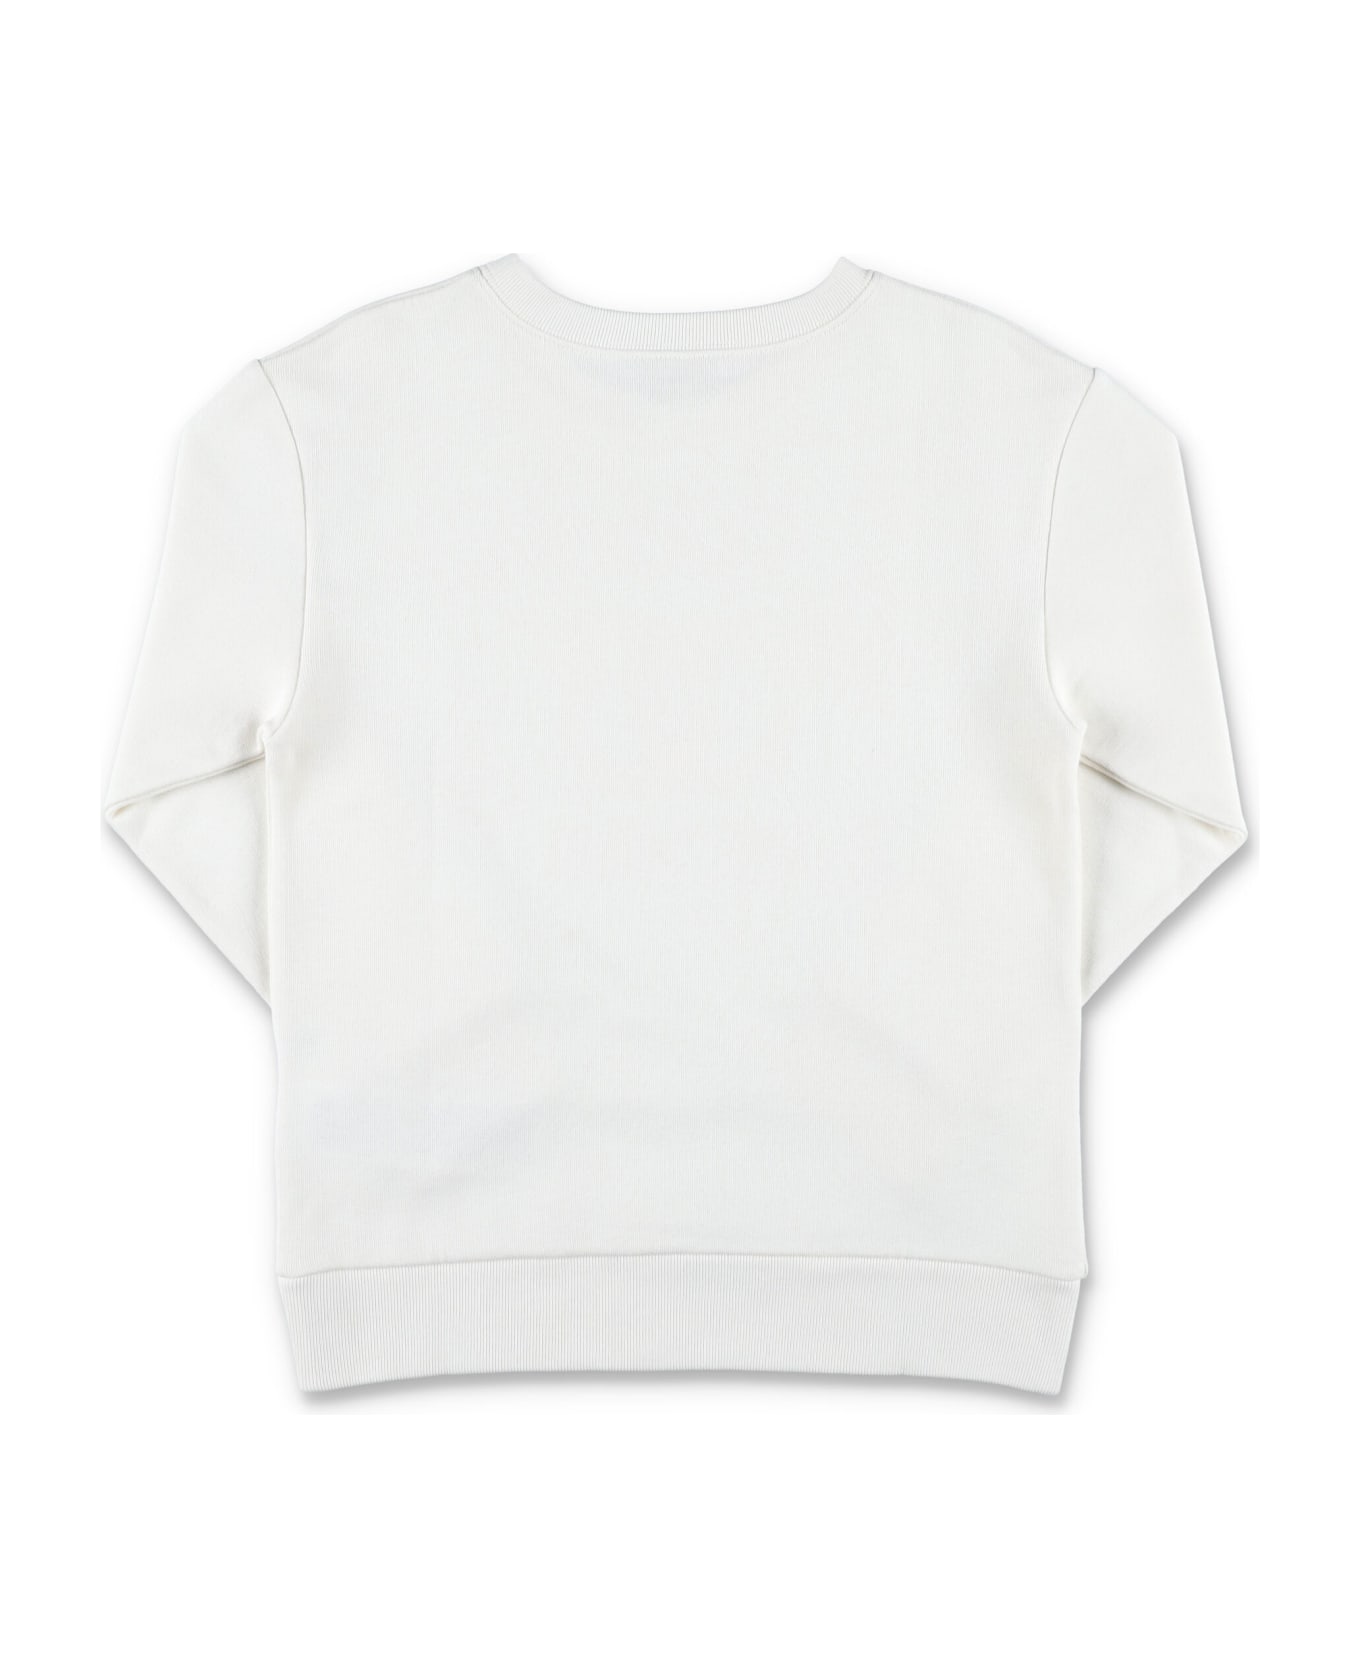 Gucci Printed Cotton Sweatshirt